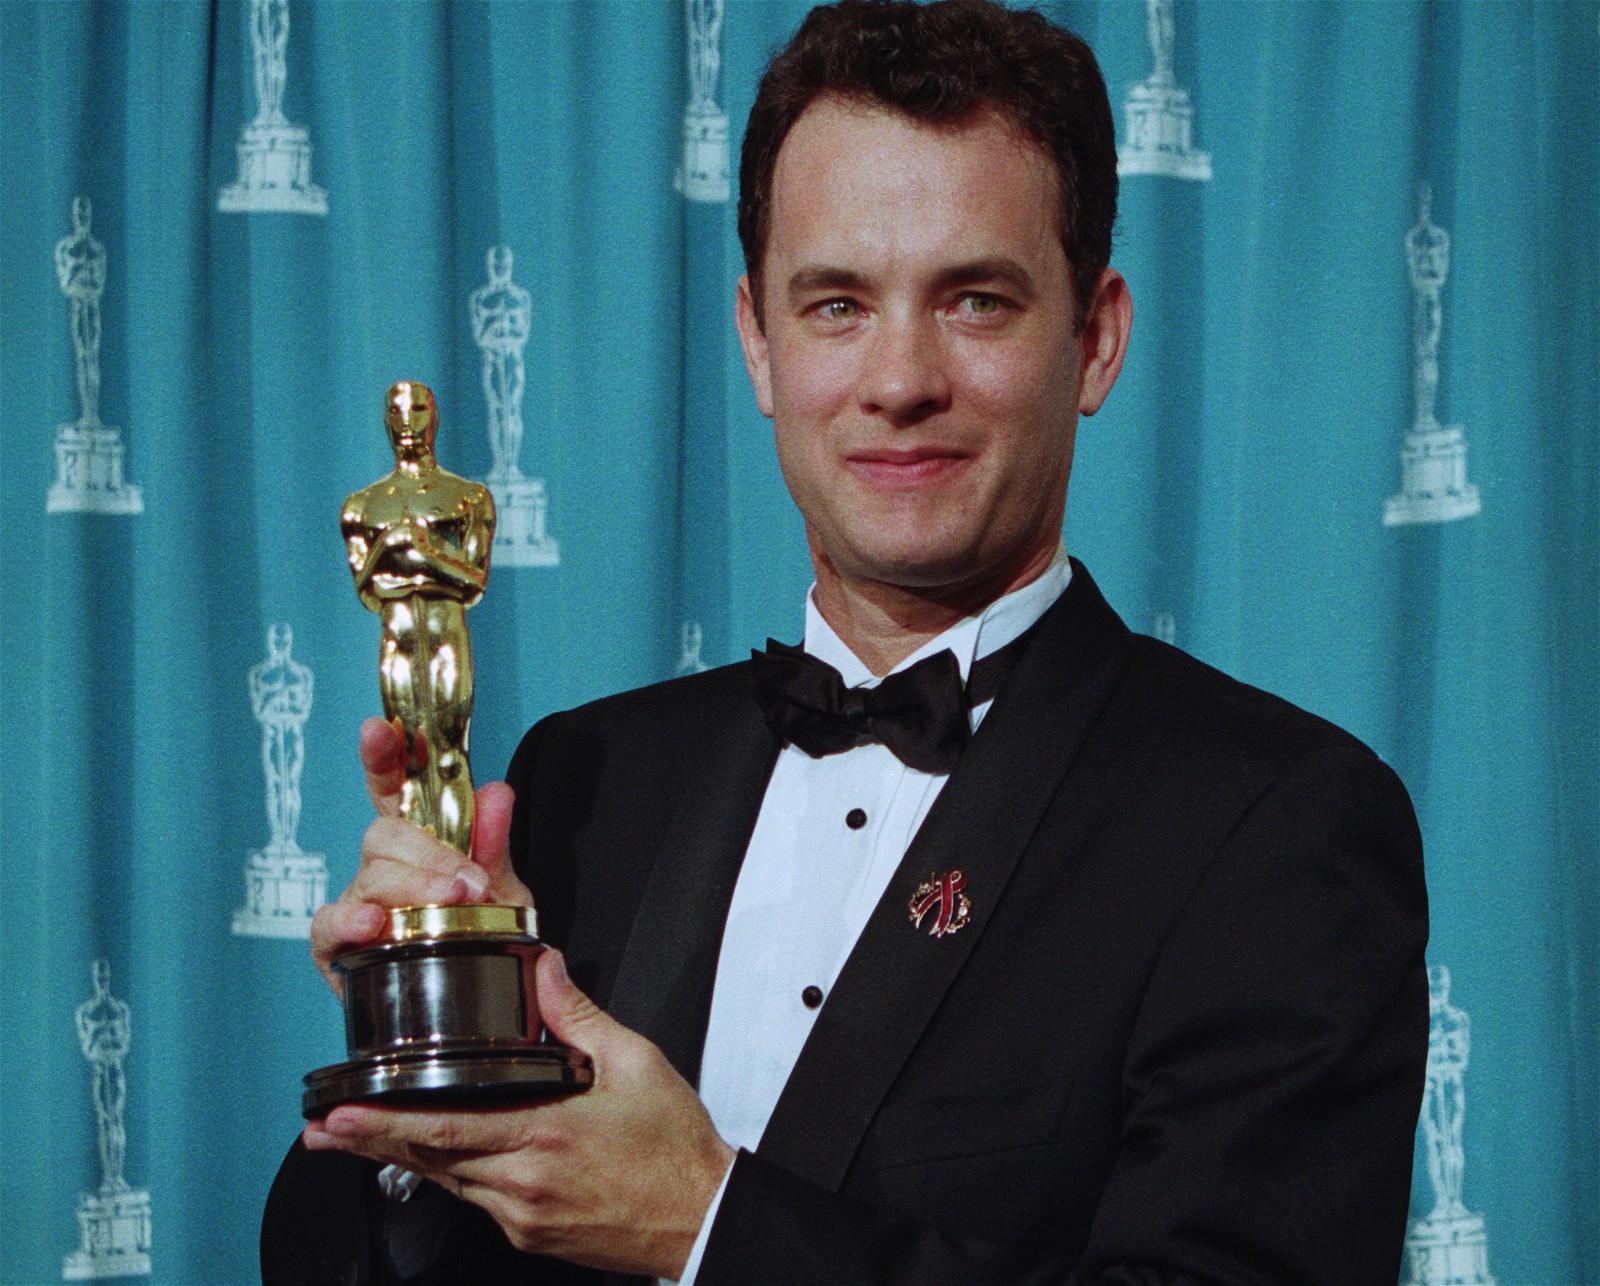 Tom Hanks with the Academy Award